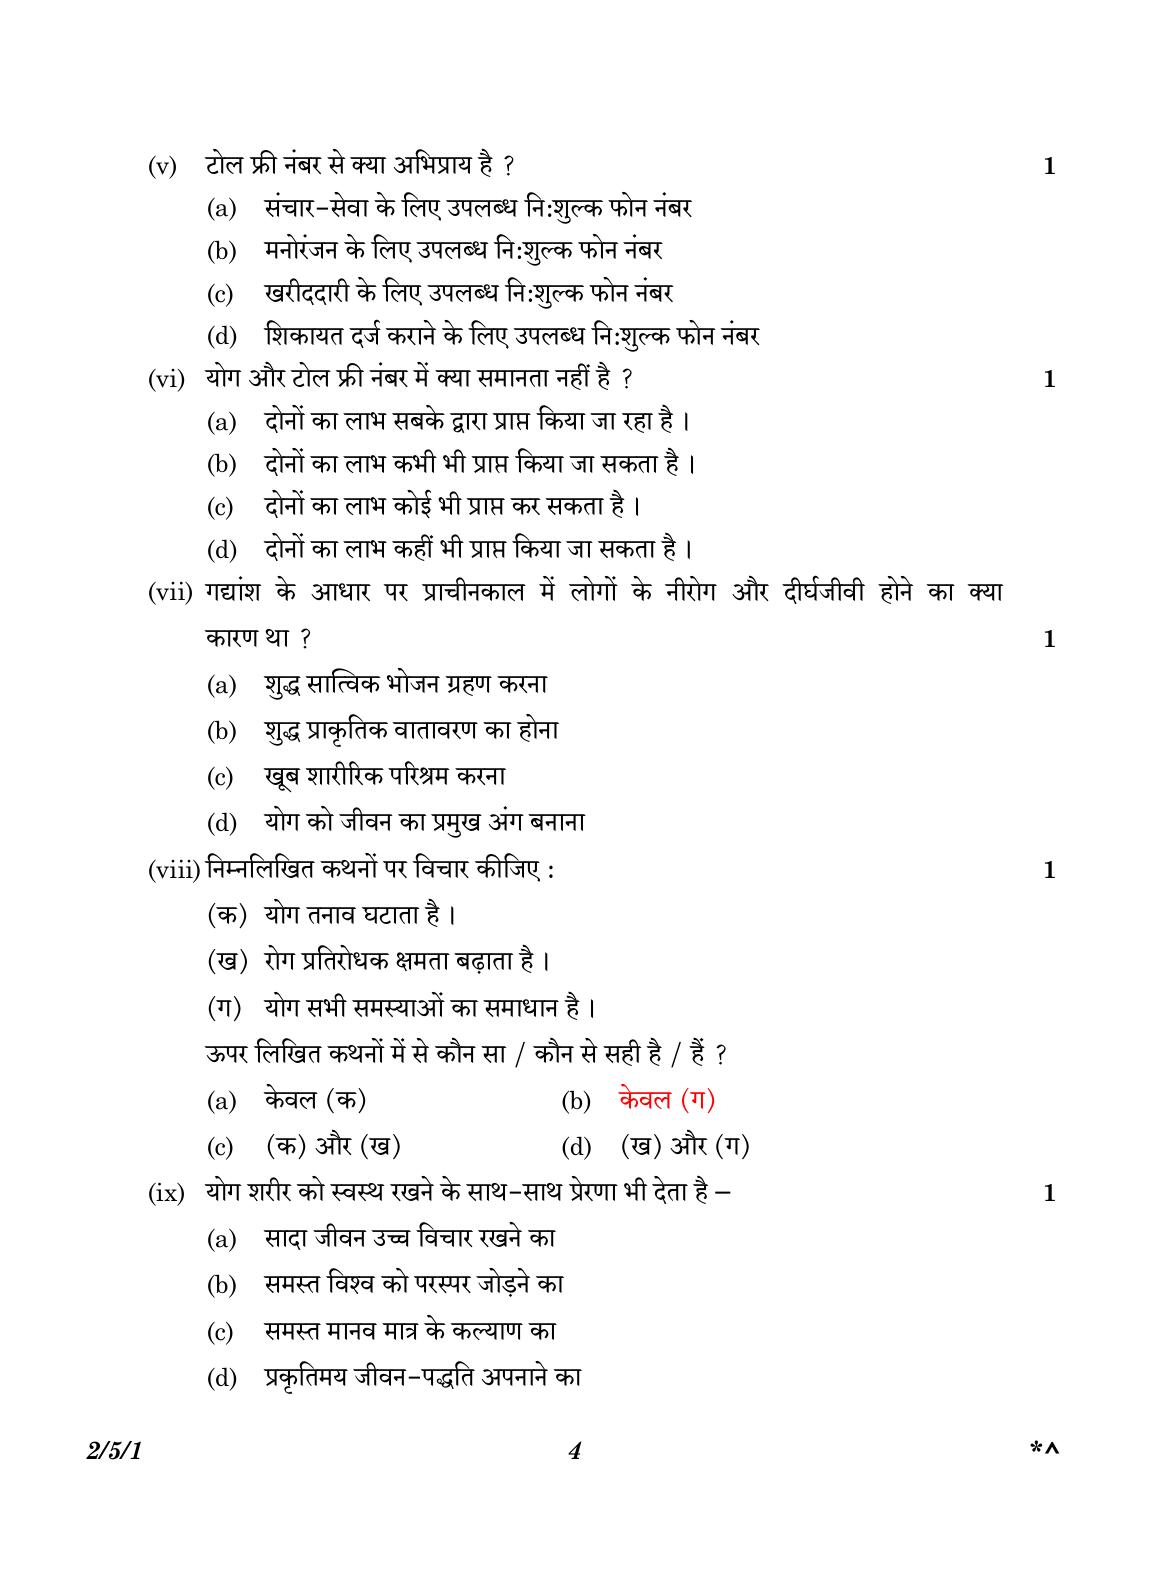 CBSE Class 12 2-5-1 Hindi Core version 2023 Question Paper - Page 4